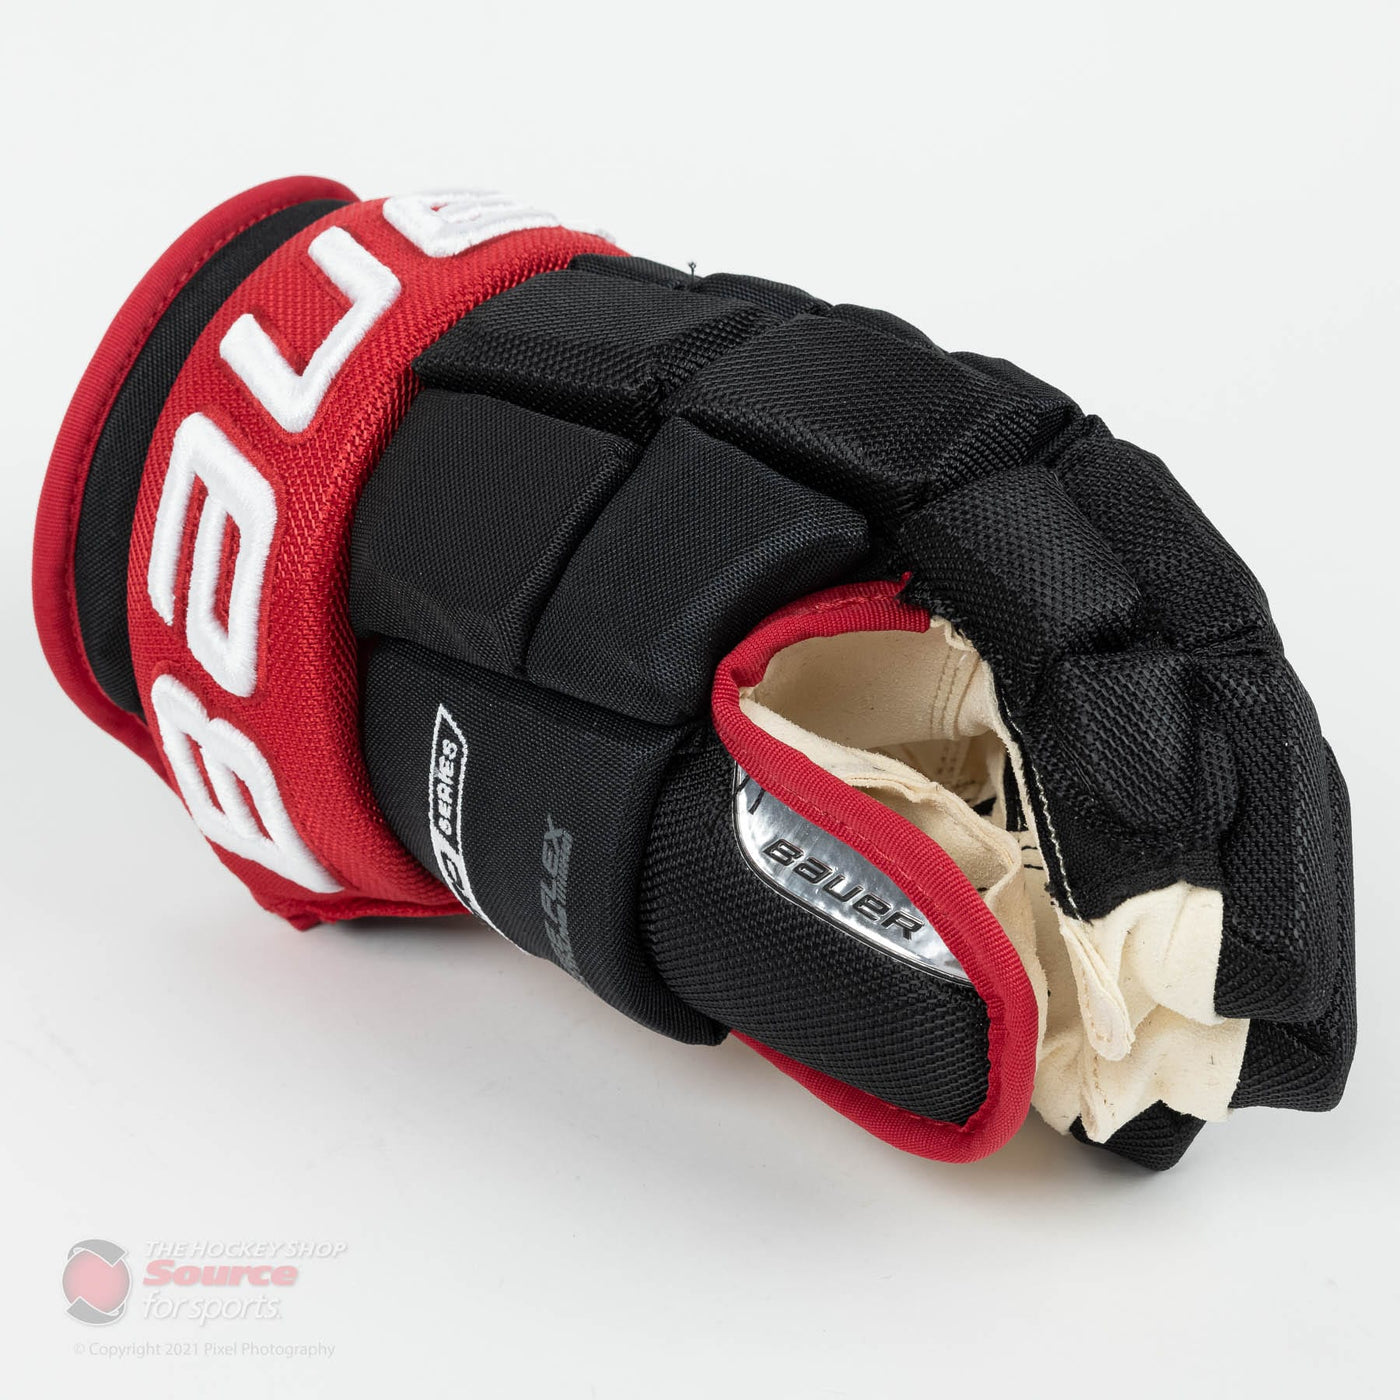 Bauer Pro Series Hockey Gloves - Intermediate - Black/Red - 12.0